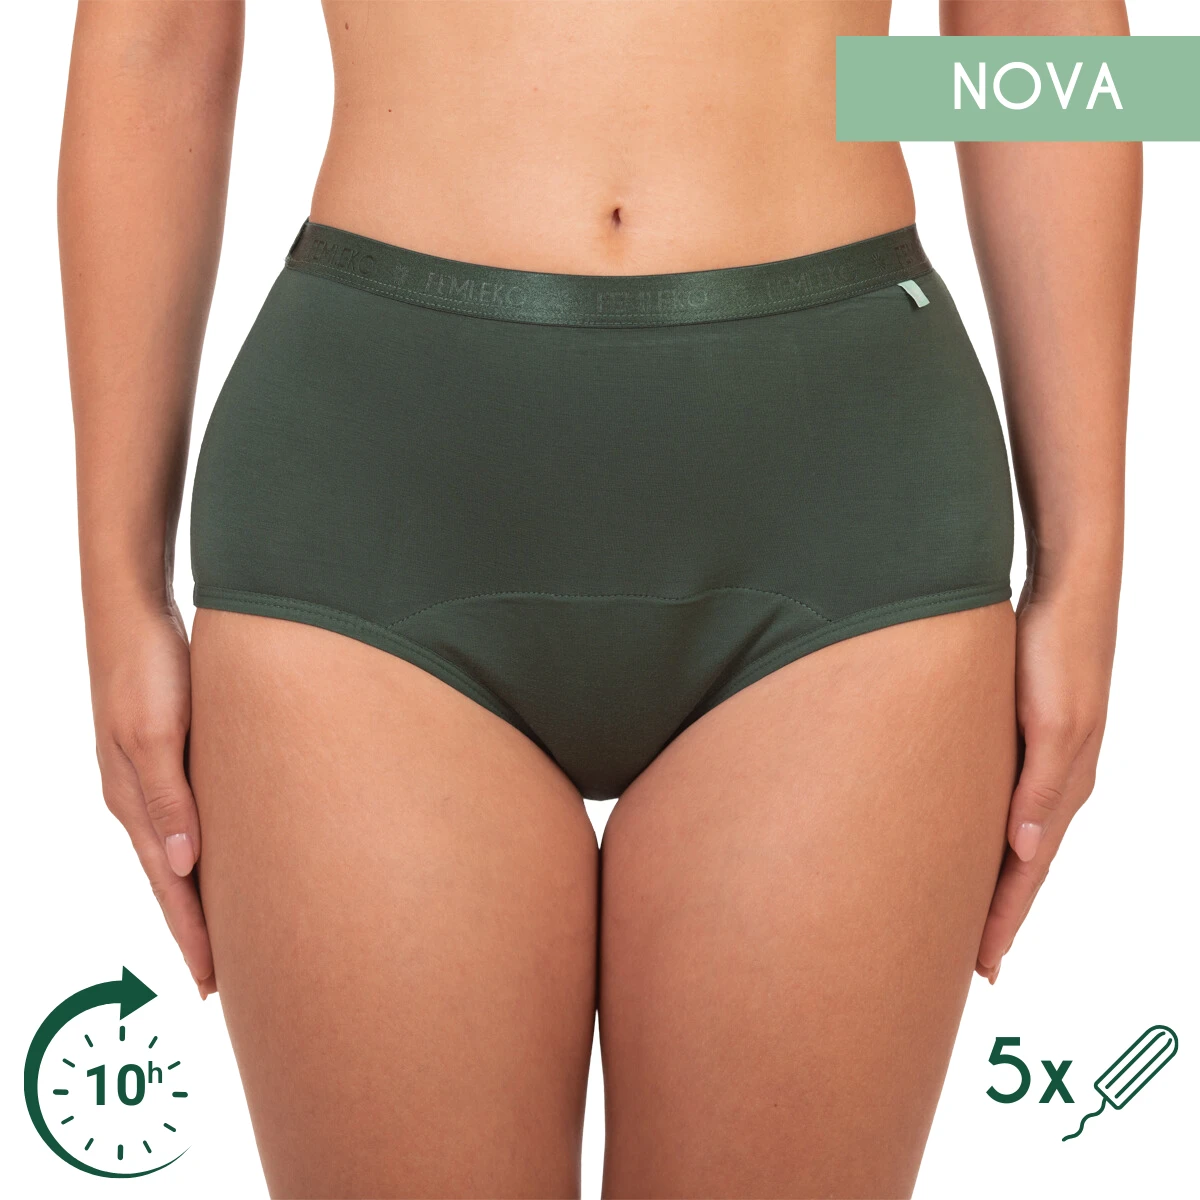 Chiloți menstruali clasici Nova, cu suprafata absorbanta full - absorbție super abundentă XL